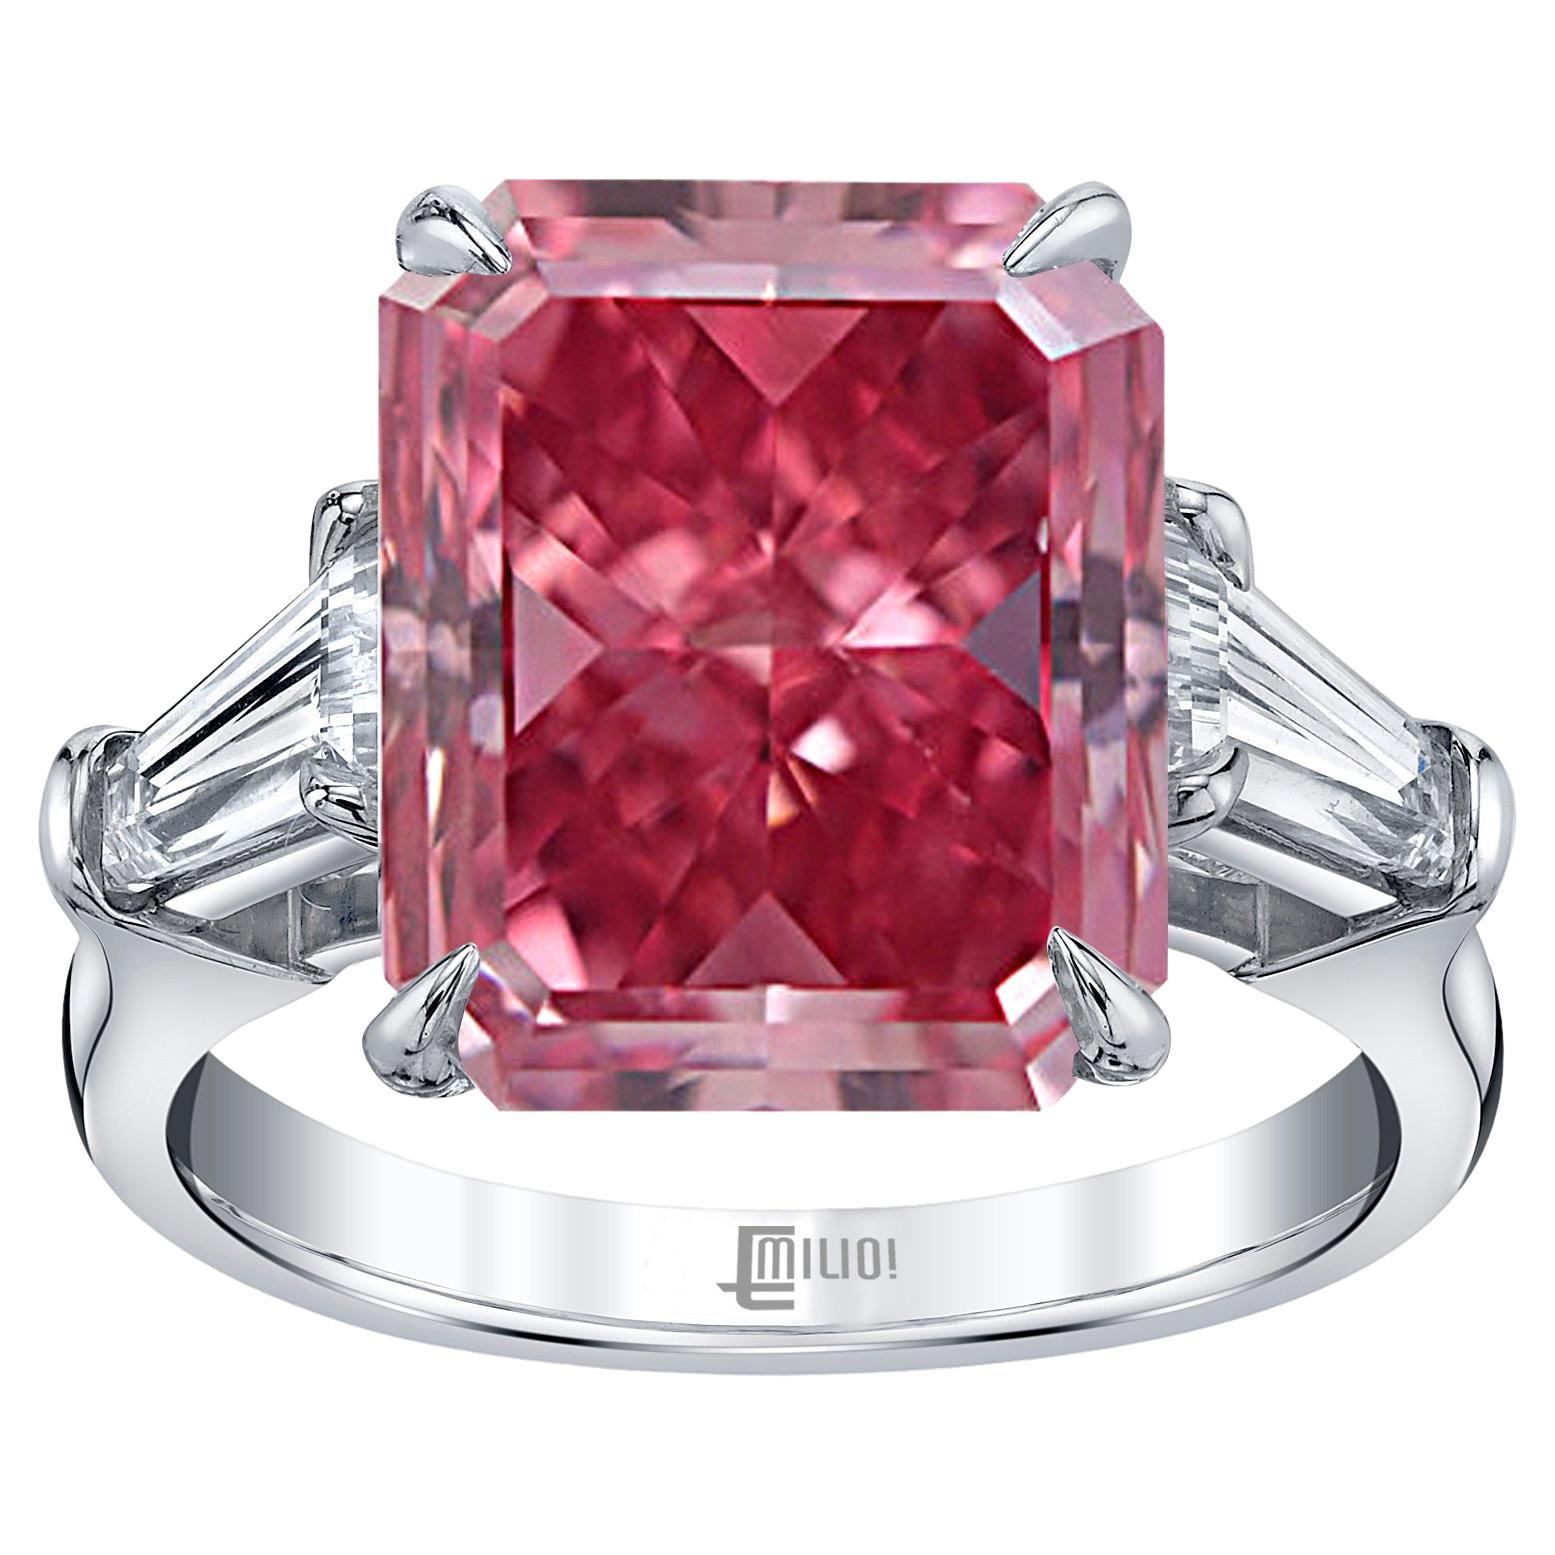 Emilio Jewelry 1.40 Carat Fancy Vivid Pure Pink Diamond Ring 